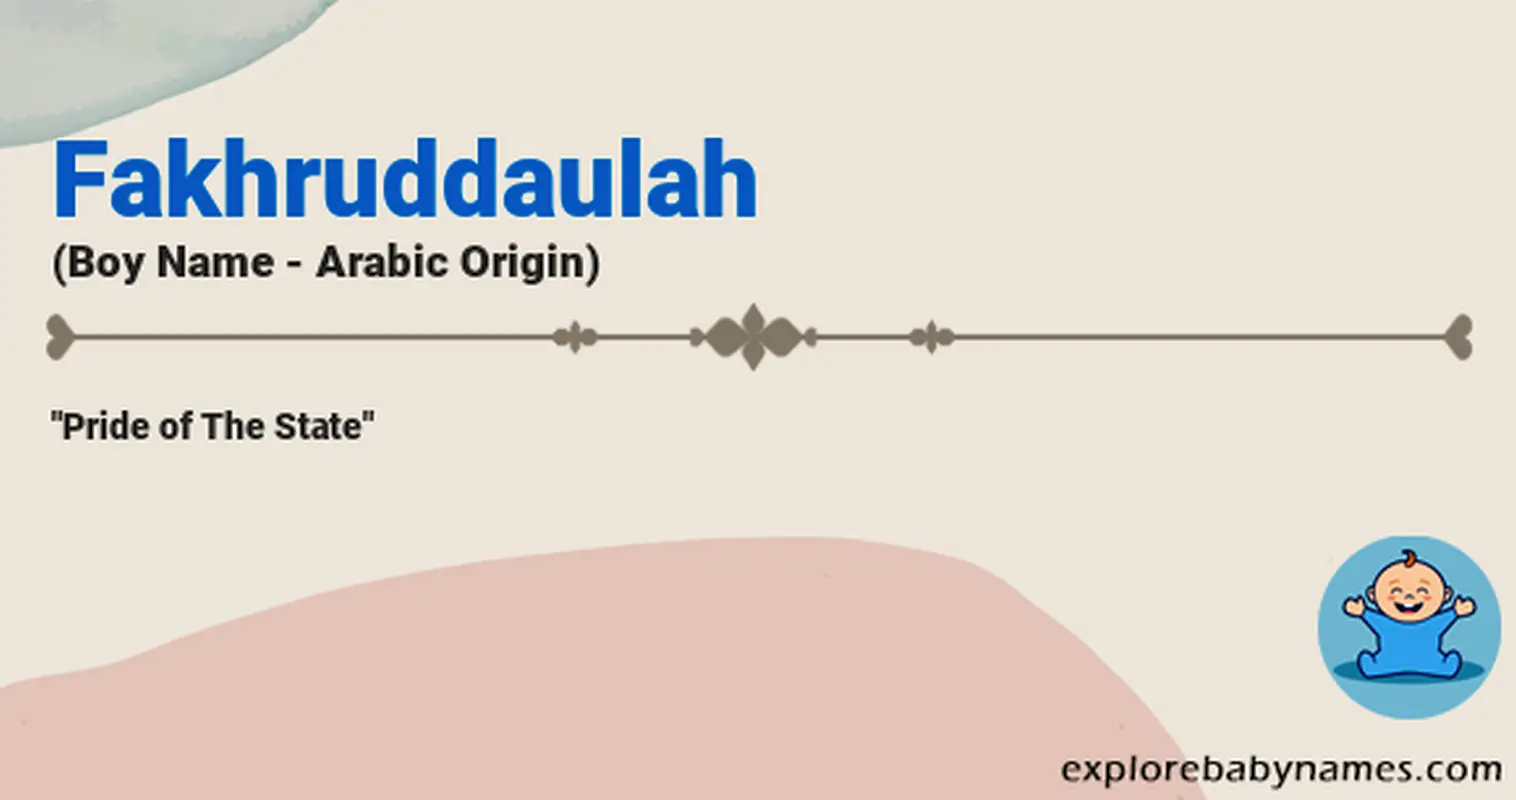 Meaning of Fakhruddaulah